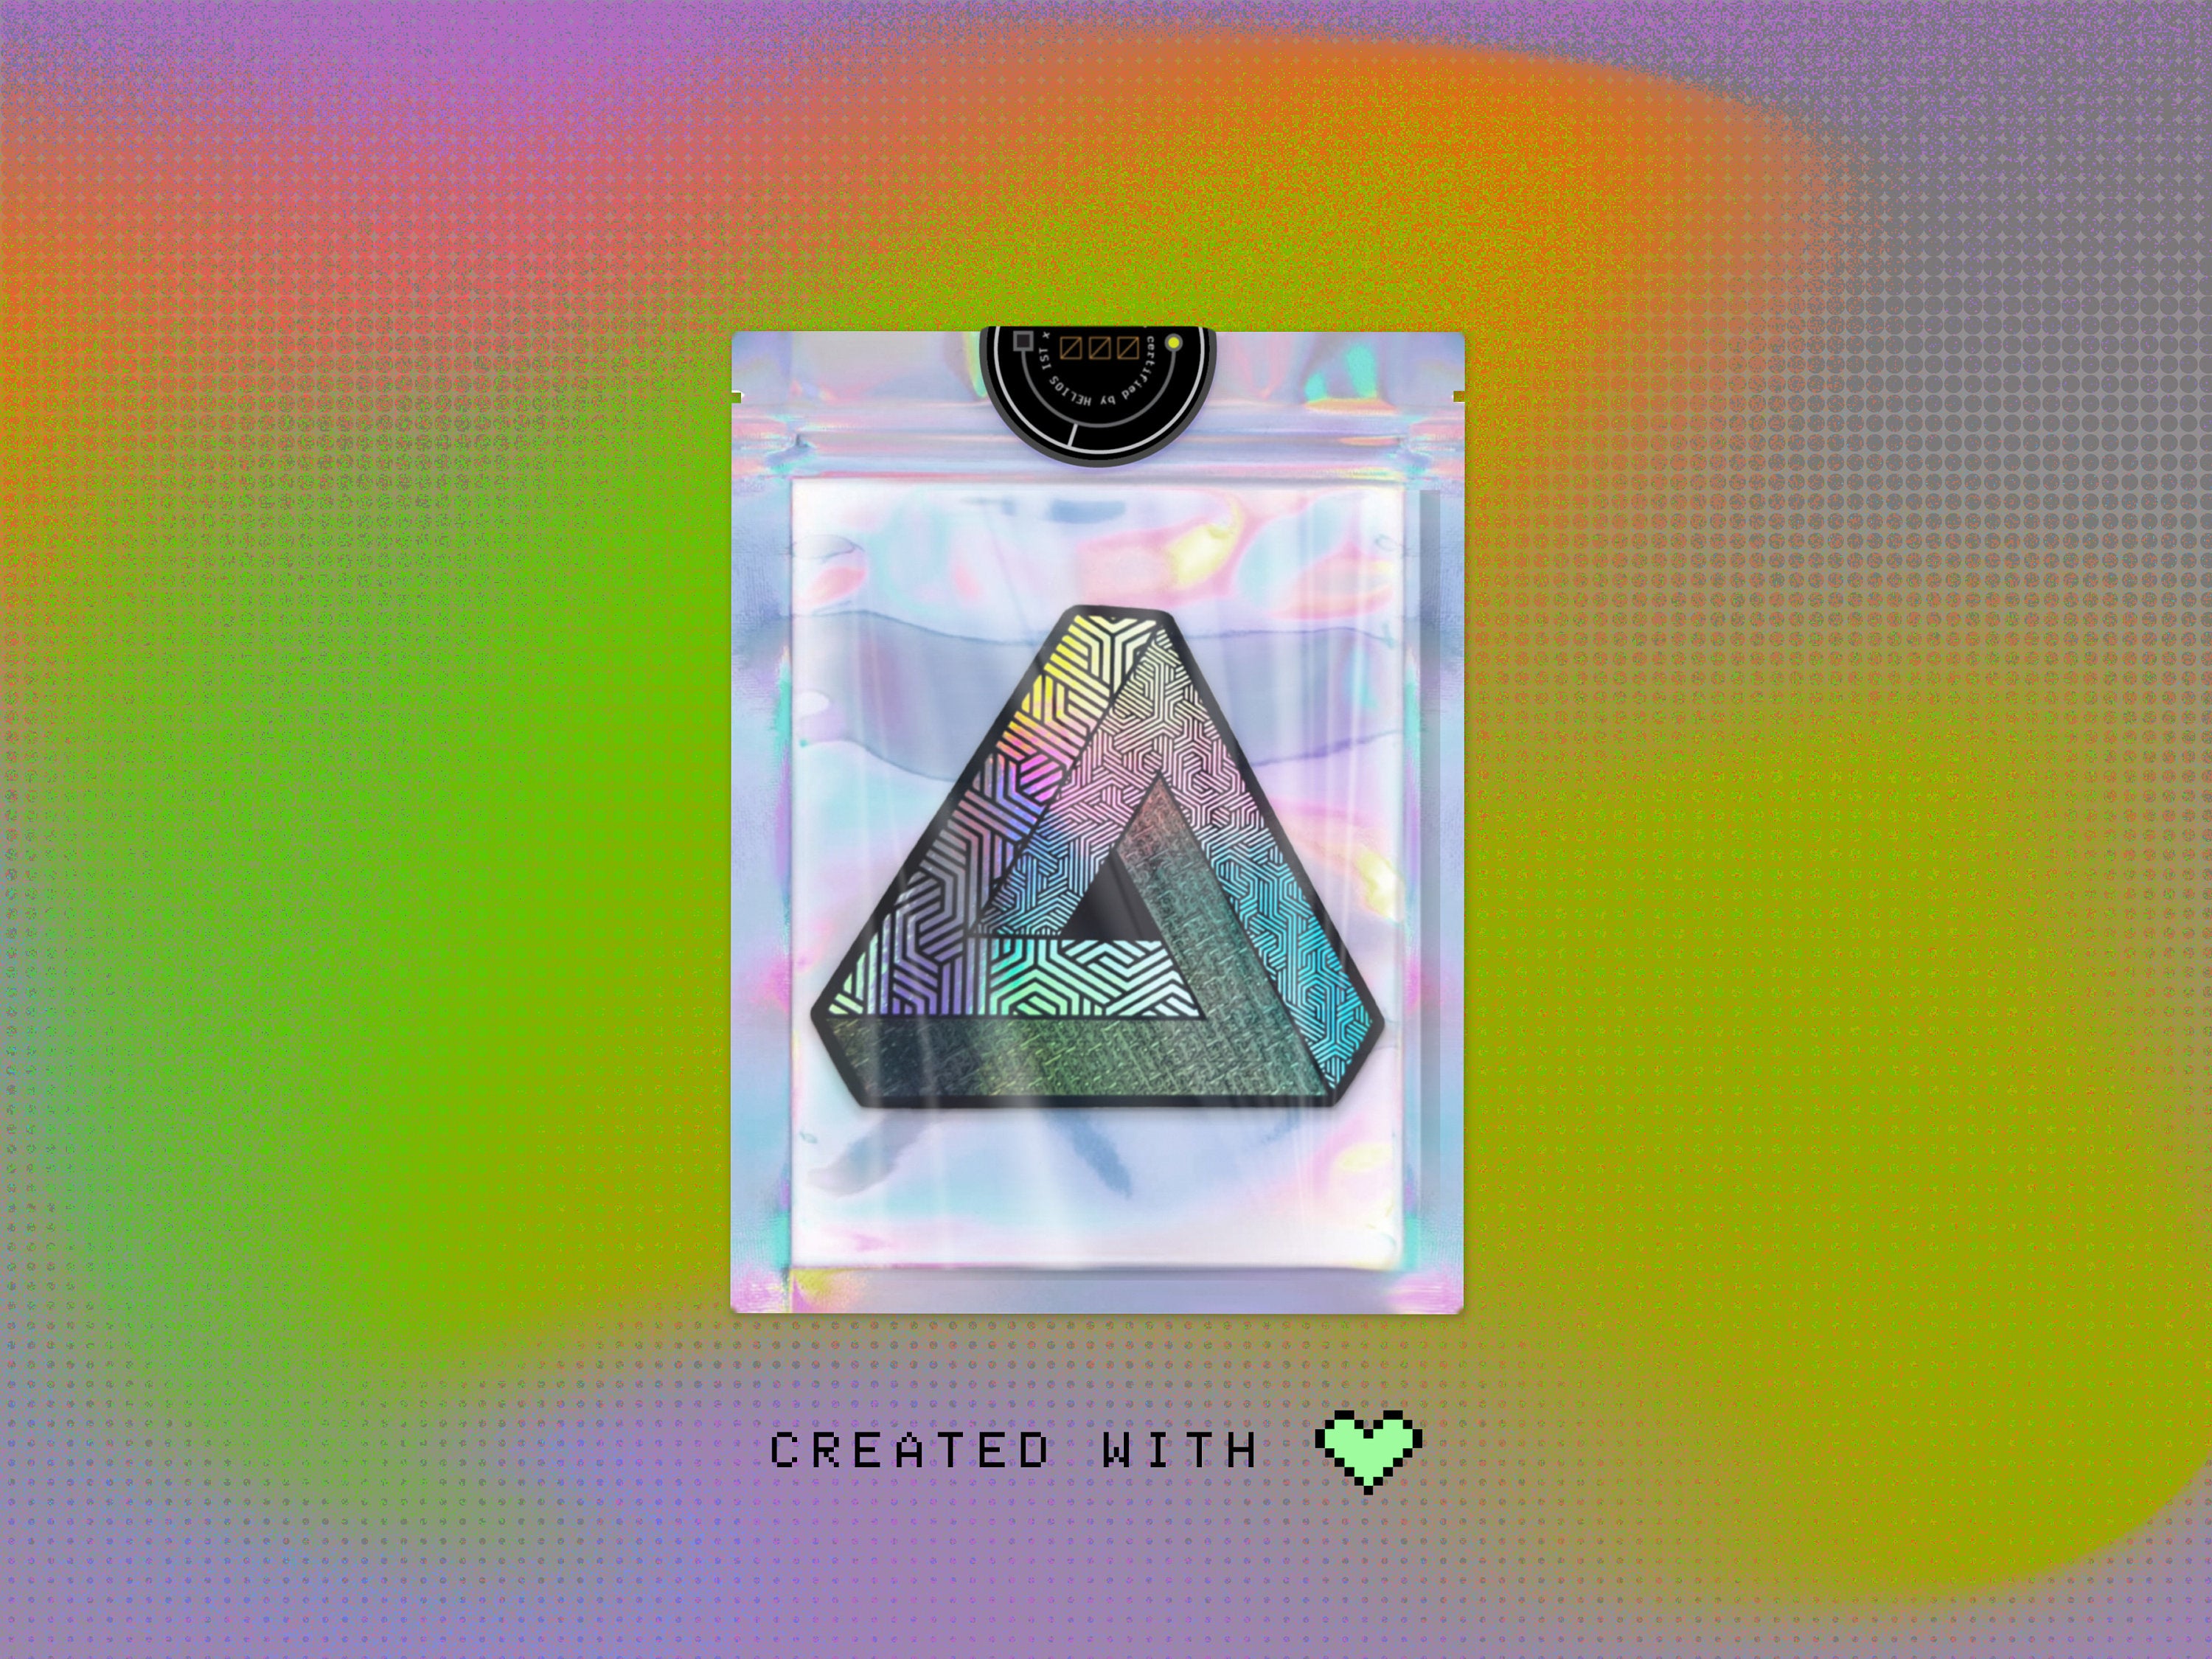 Penrose Triangle Cyberpunk Decal - Futuristic / Minimalist Holographic Sticker - Optical Illusion Math & Geometry Laptop Sticker by The Sciencey